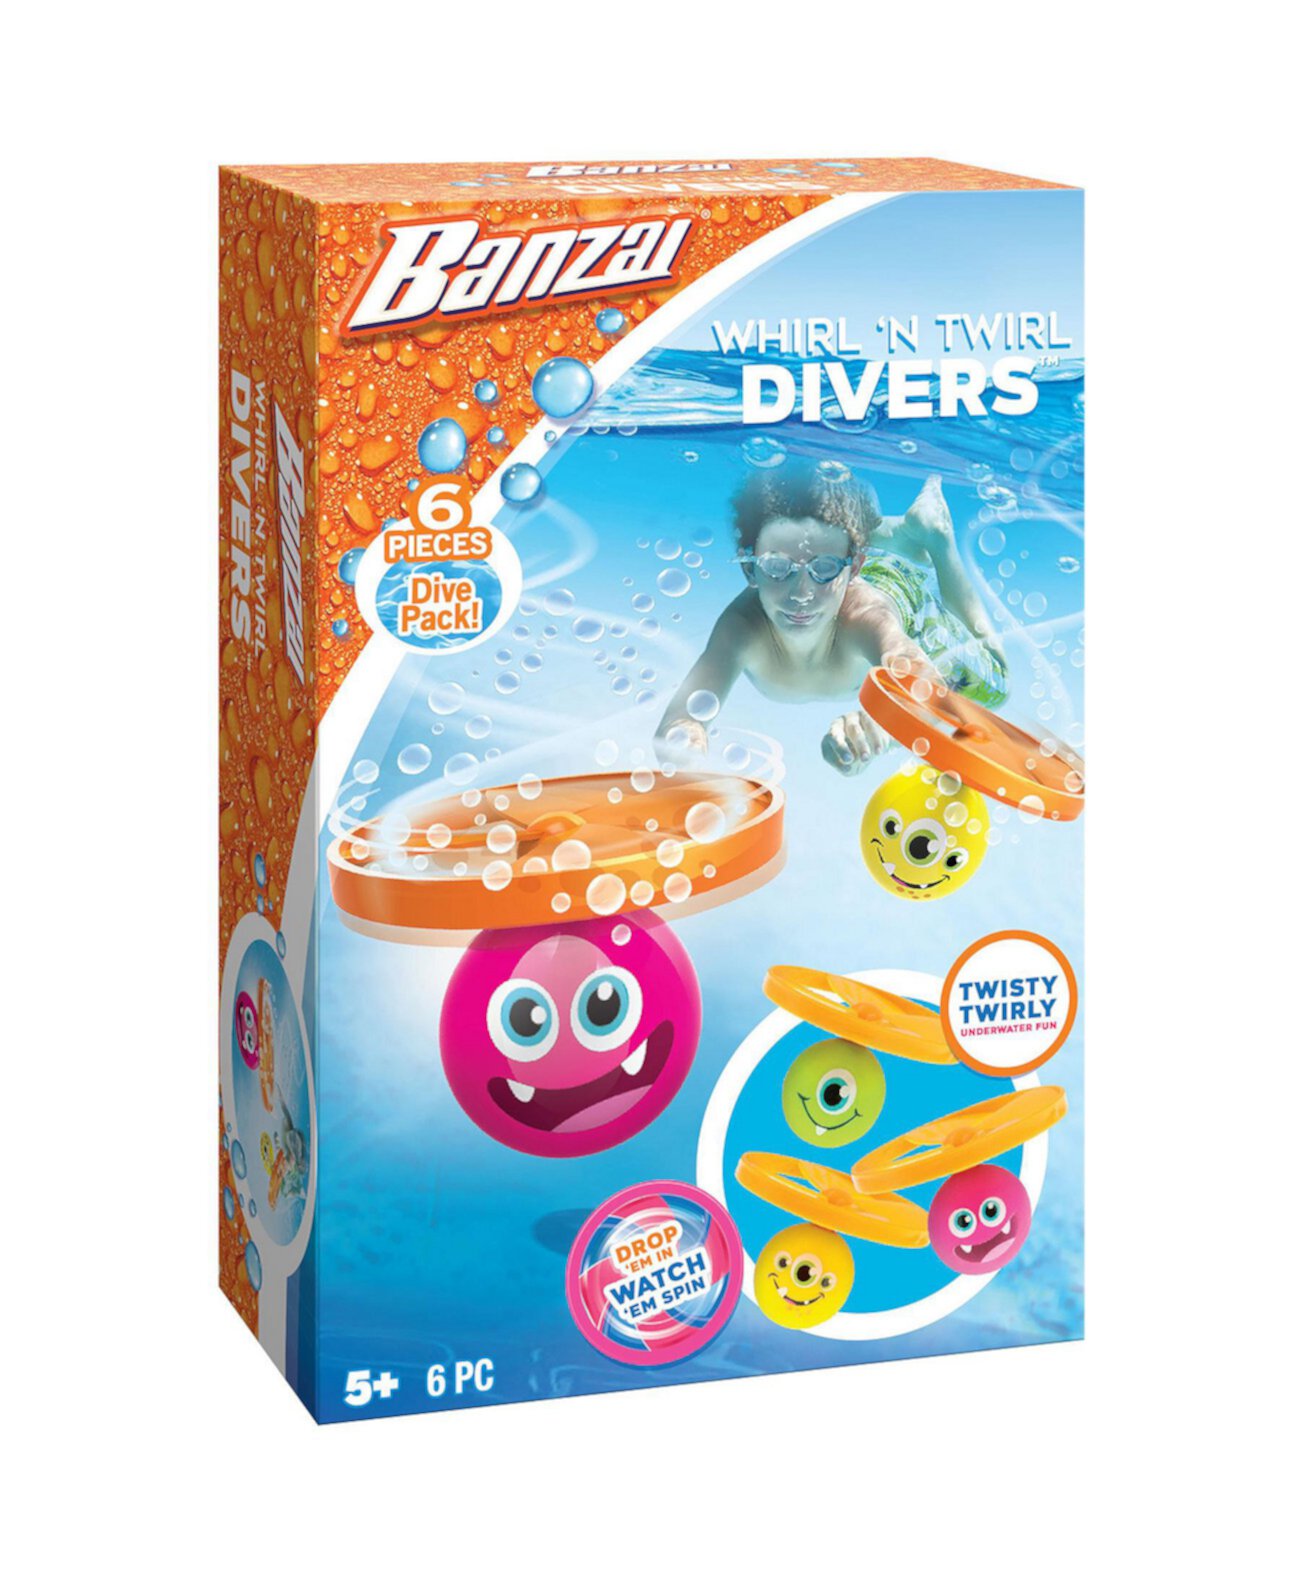 Набор игрушек для дайвинга Whirl 'N Twirl Waterpool, набор из 6 предметов Banzai